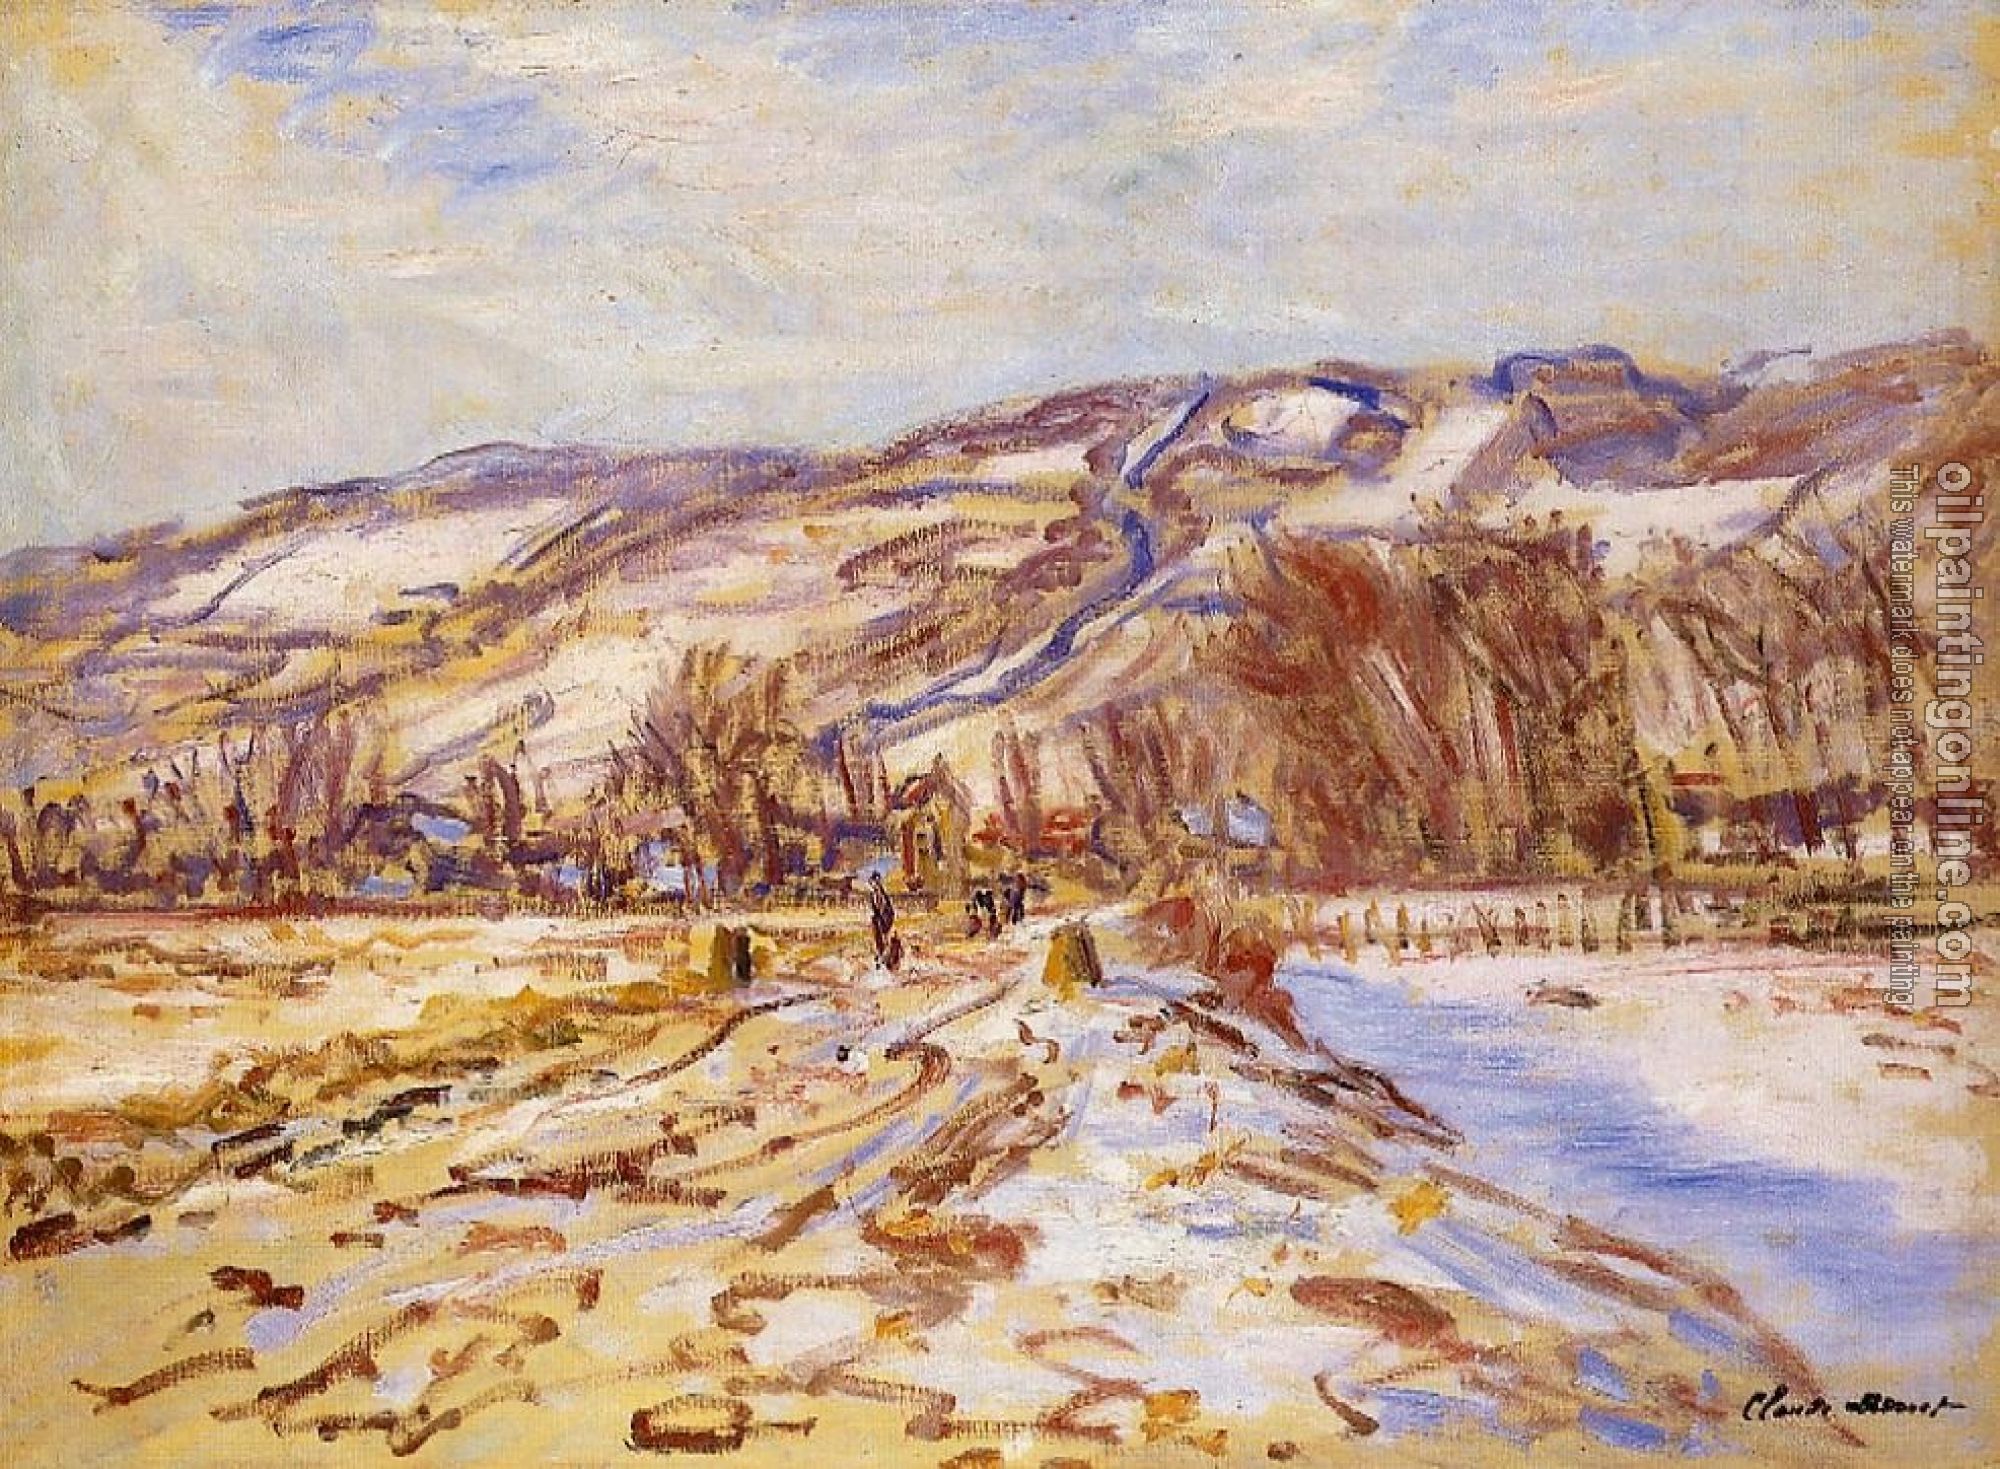 Monet, Claude Oscar - Winter at Giverny